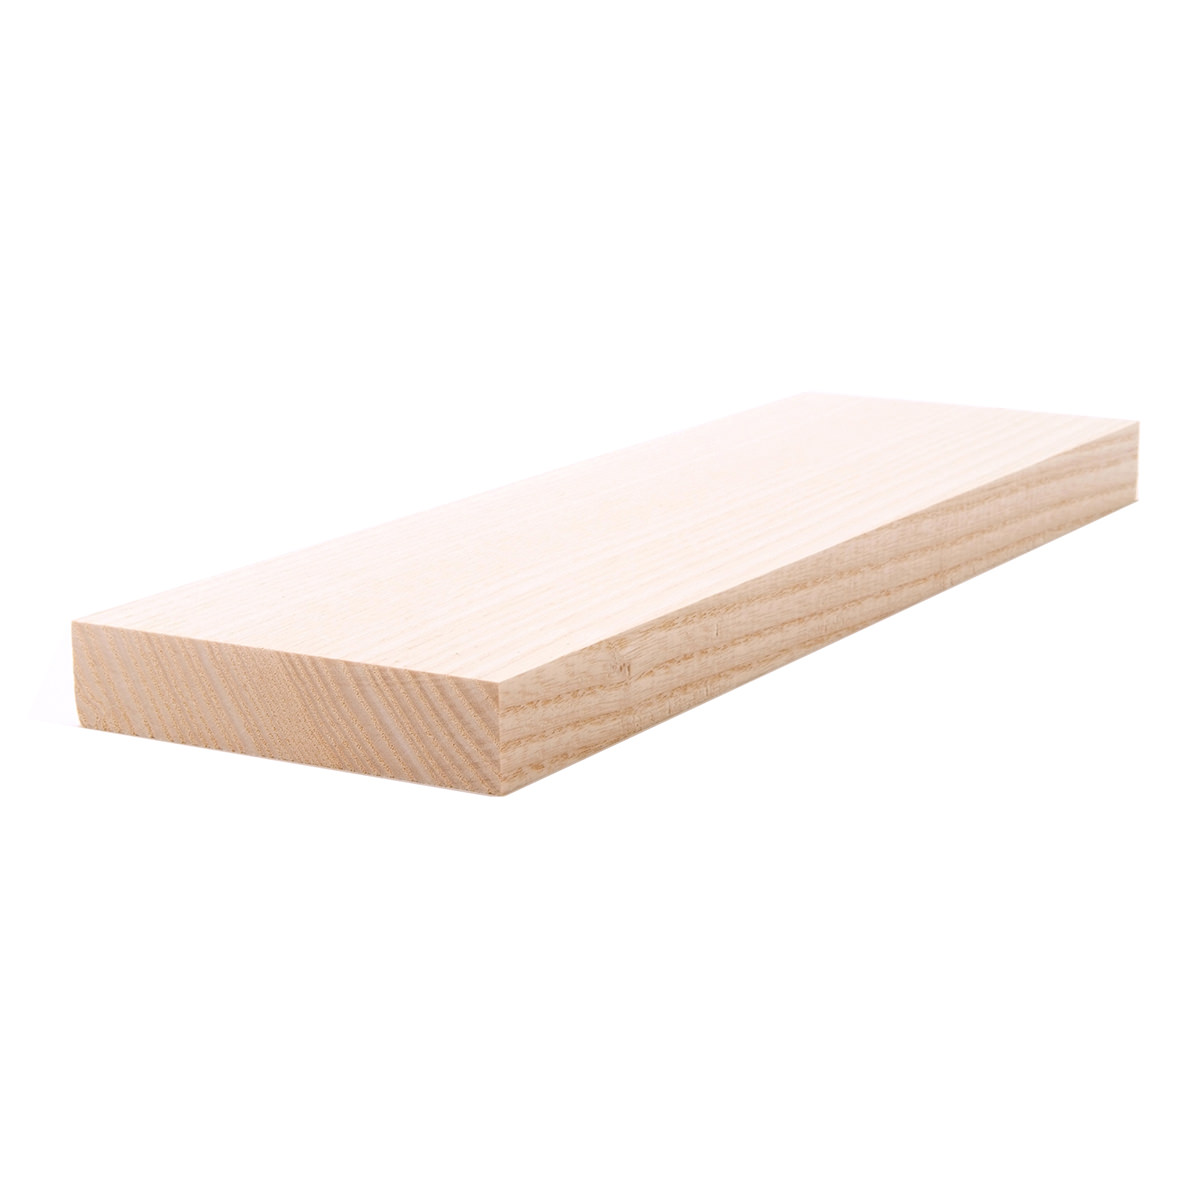 Turning Wood ASH WOOD   Lumber Board 4 Pack Set 2" x 2" x 18"  FREE SHIPPING 